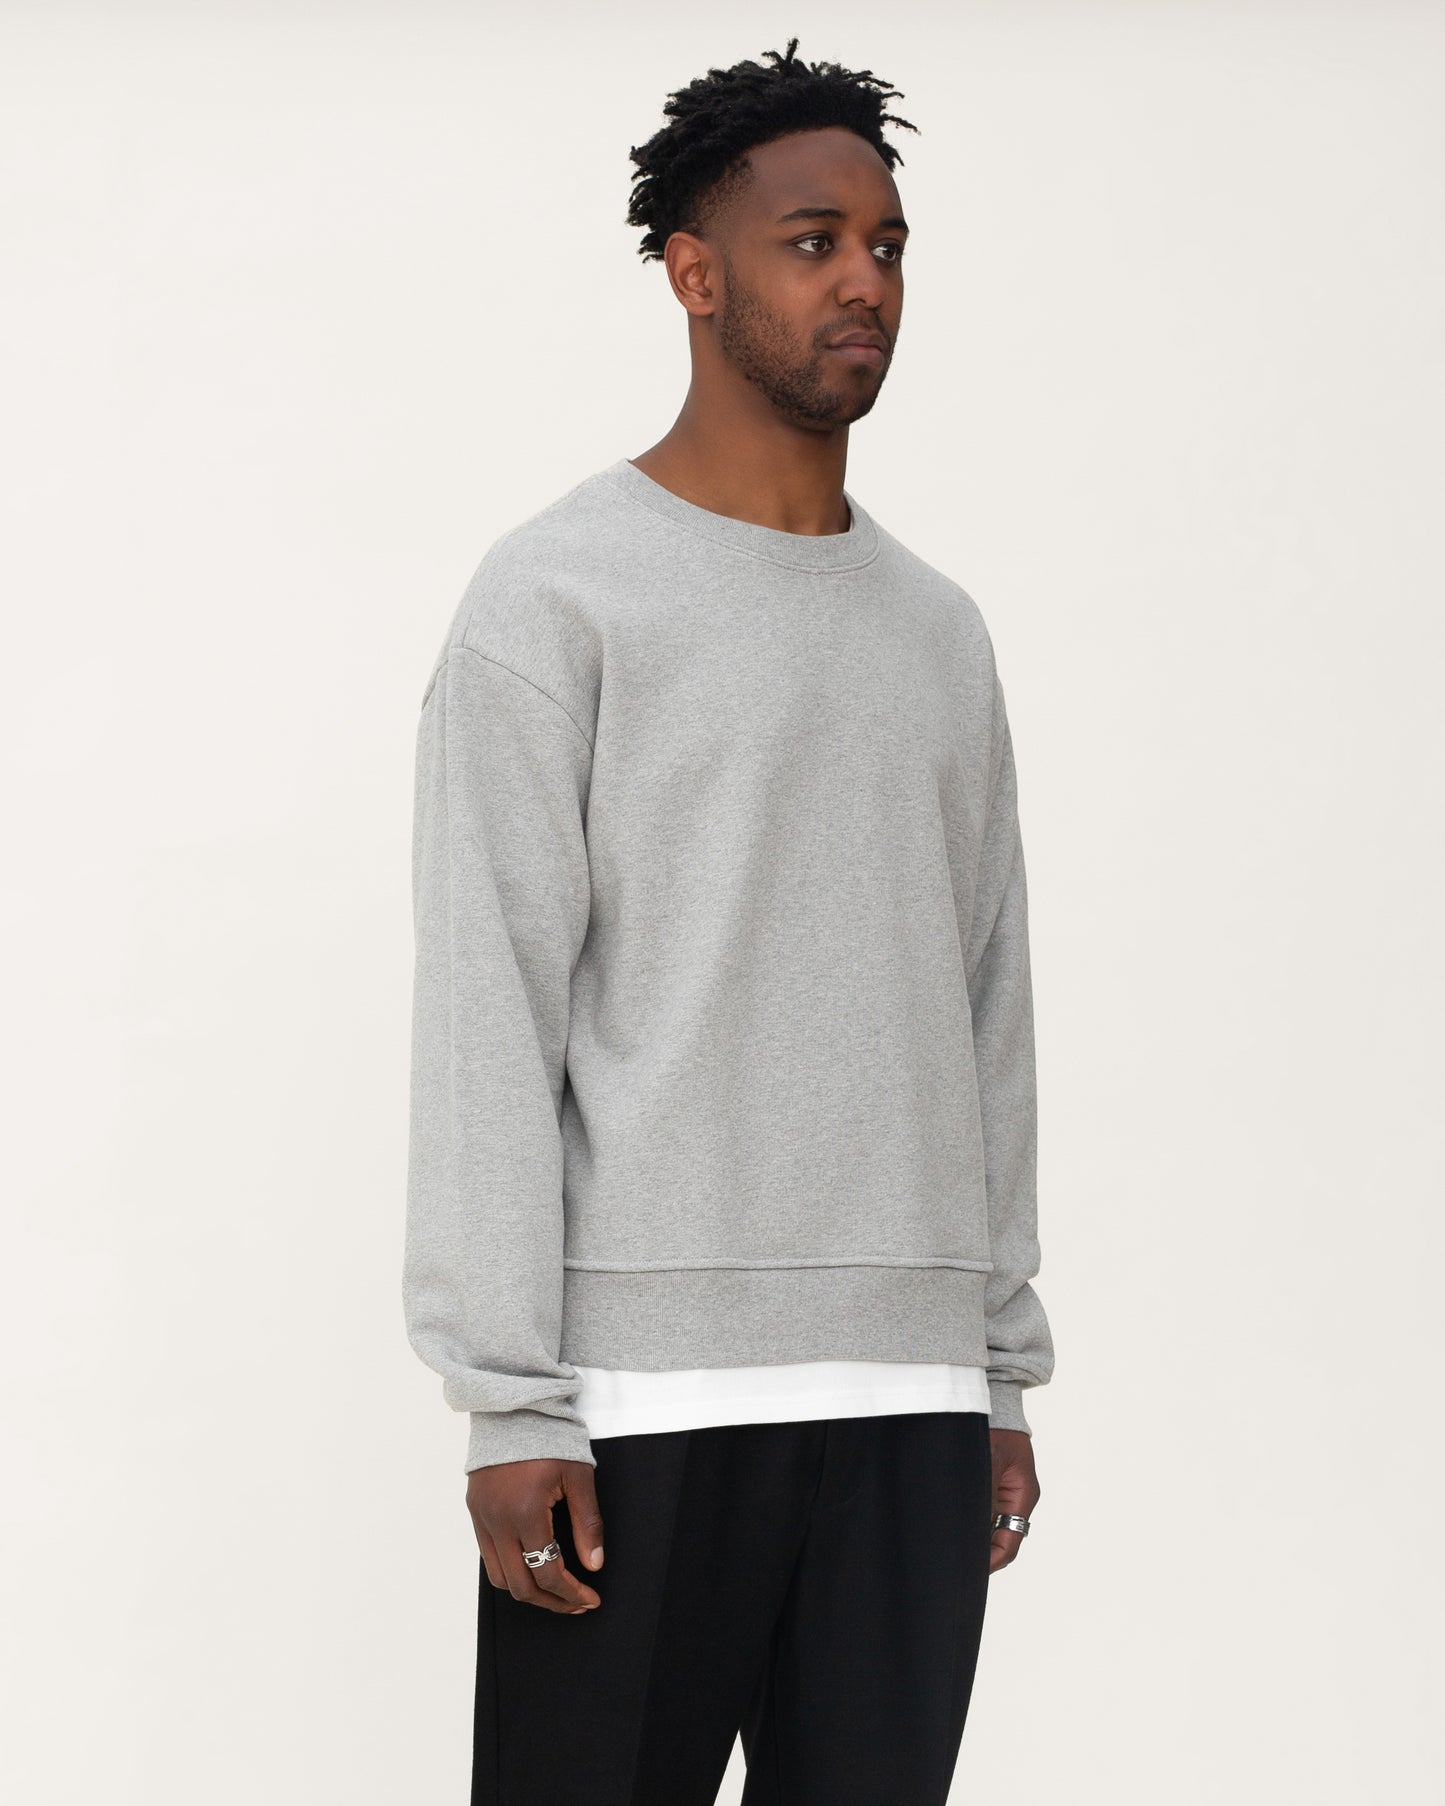 mens designer sweatshirts, mens grey sweatshirt, angle side